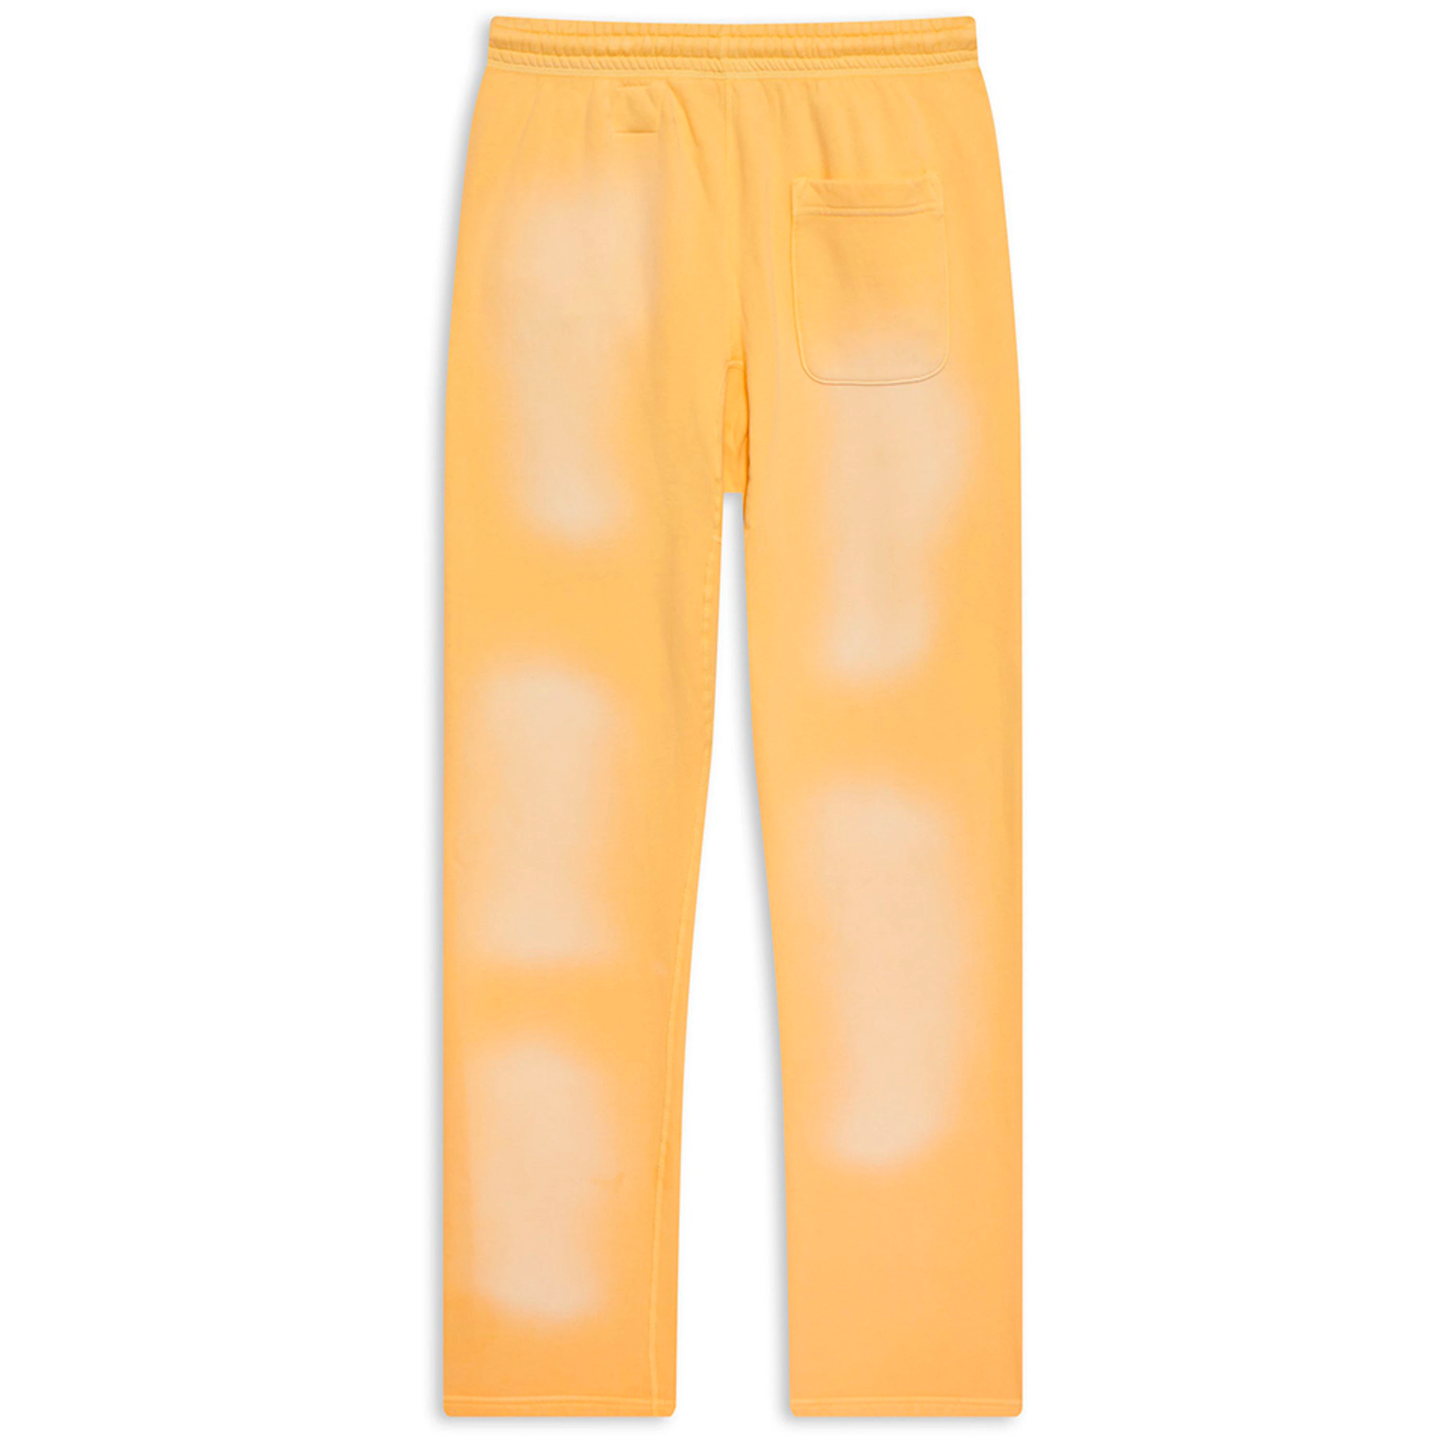 Hellstar Sports Yellow Sweatpants